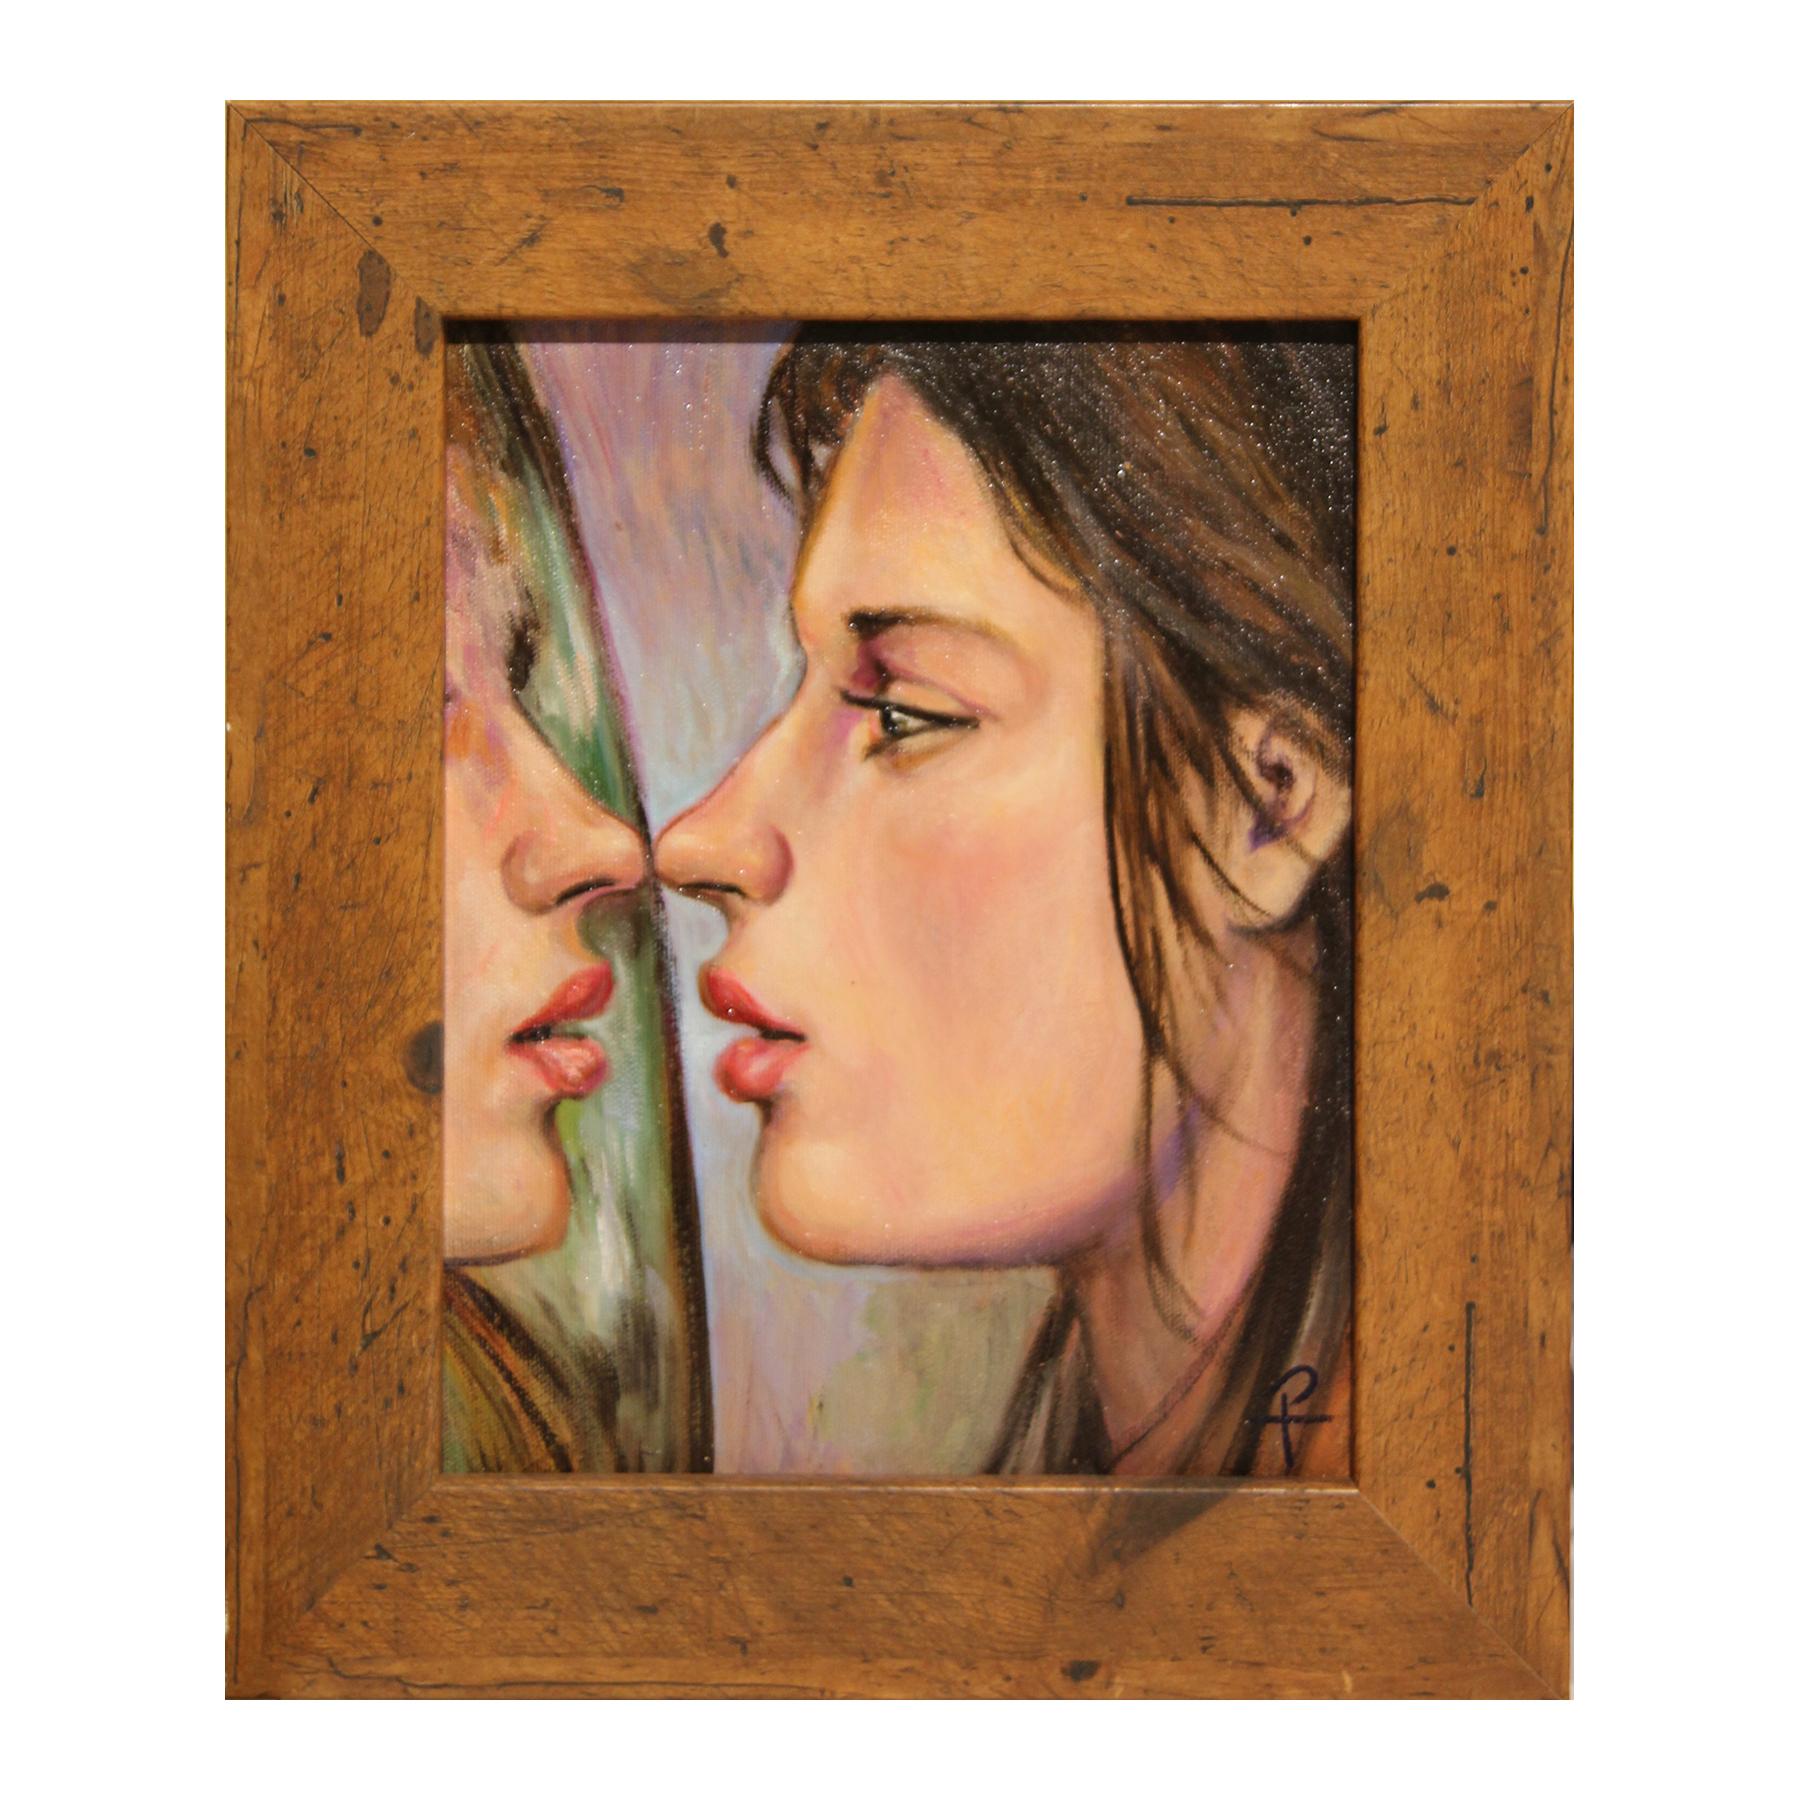 Henry David Potwin Figurative Painting - “Practice Kiss” Pastel Contemporary Surrealist Figurative Portrait of a Woman